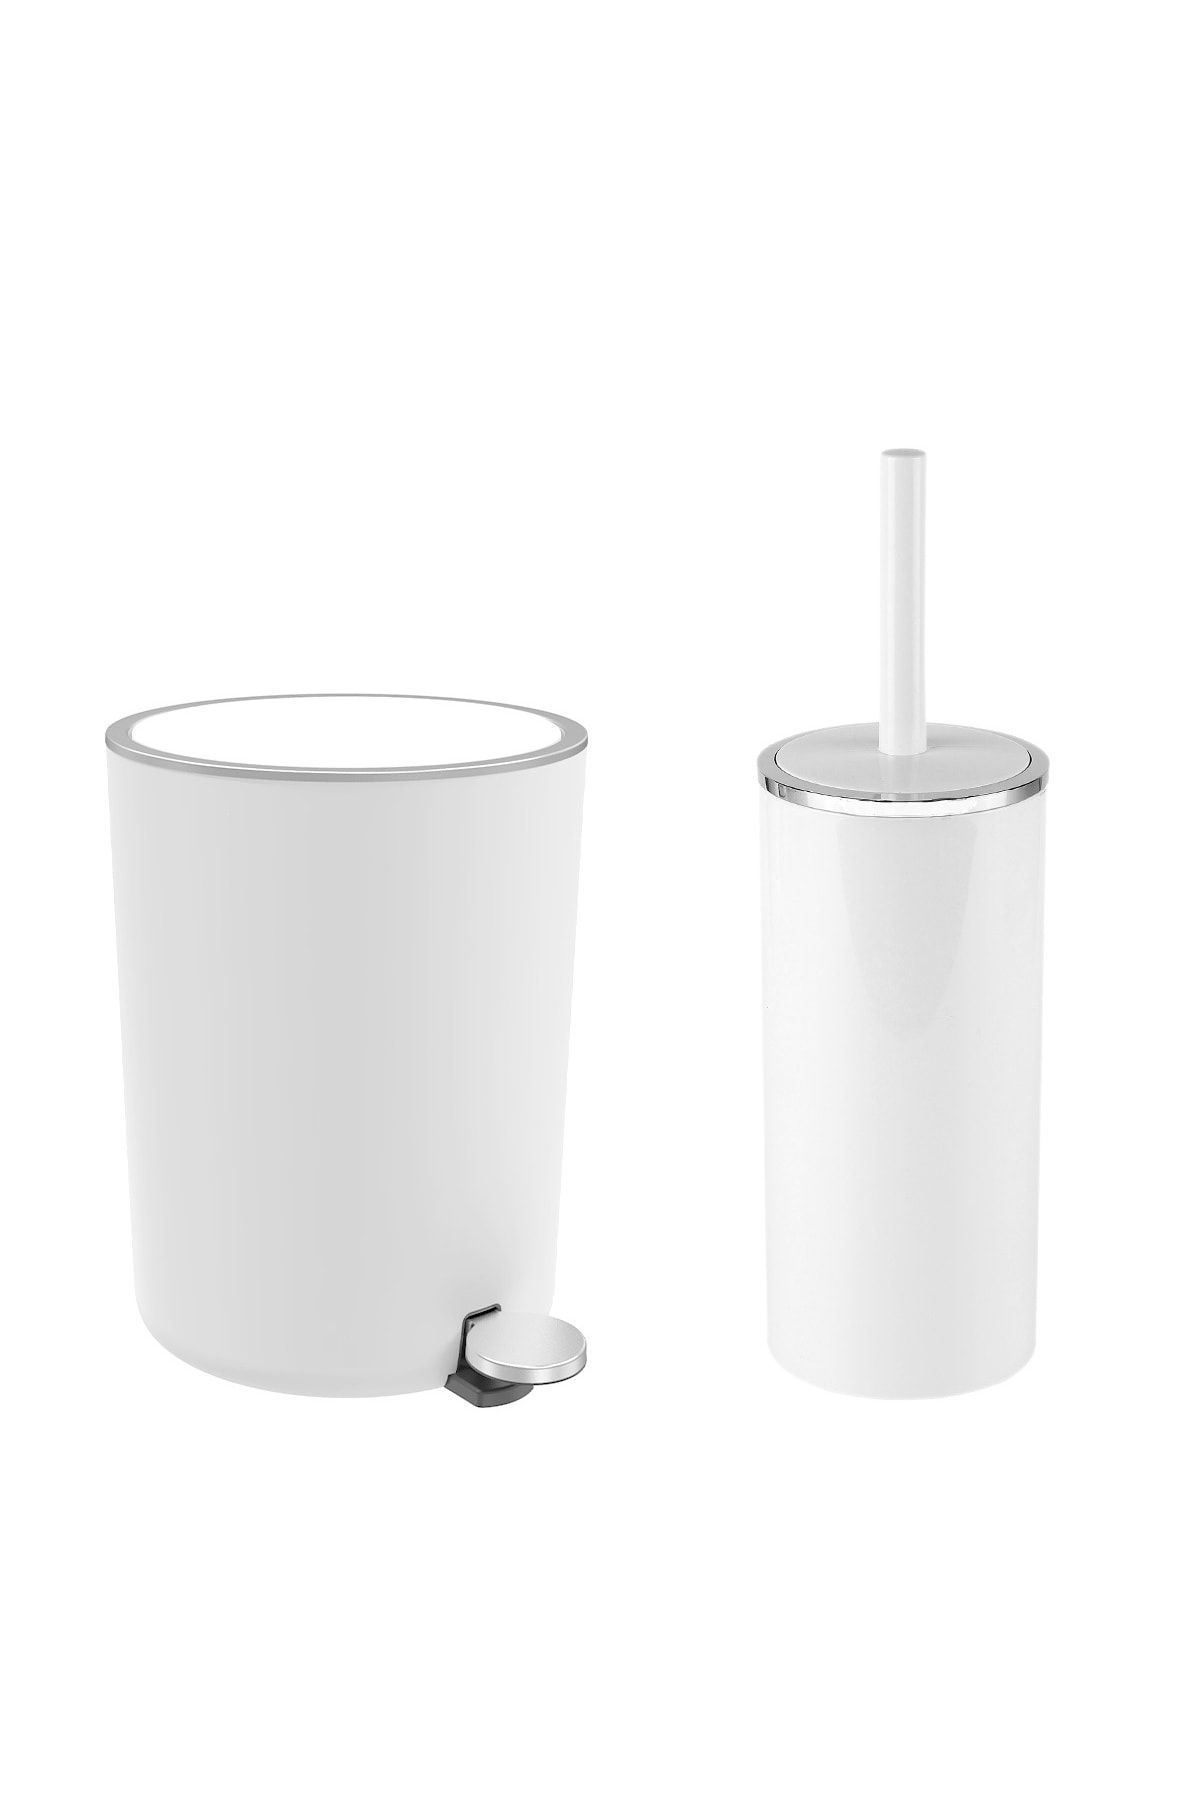 Prima Nova Lenox 5 Lt Pedallı Banyo Çöp Kovası Tuvalet Fırçası Set Beyaz 2'li